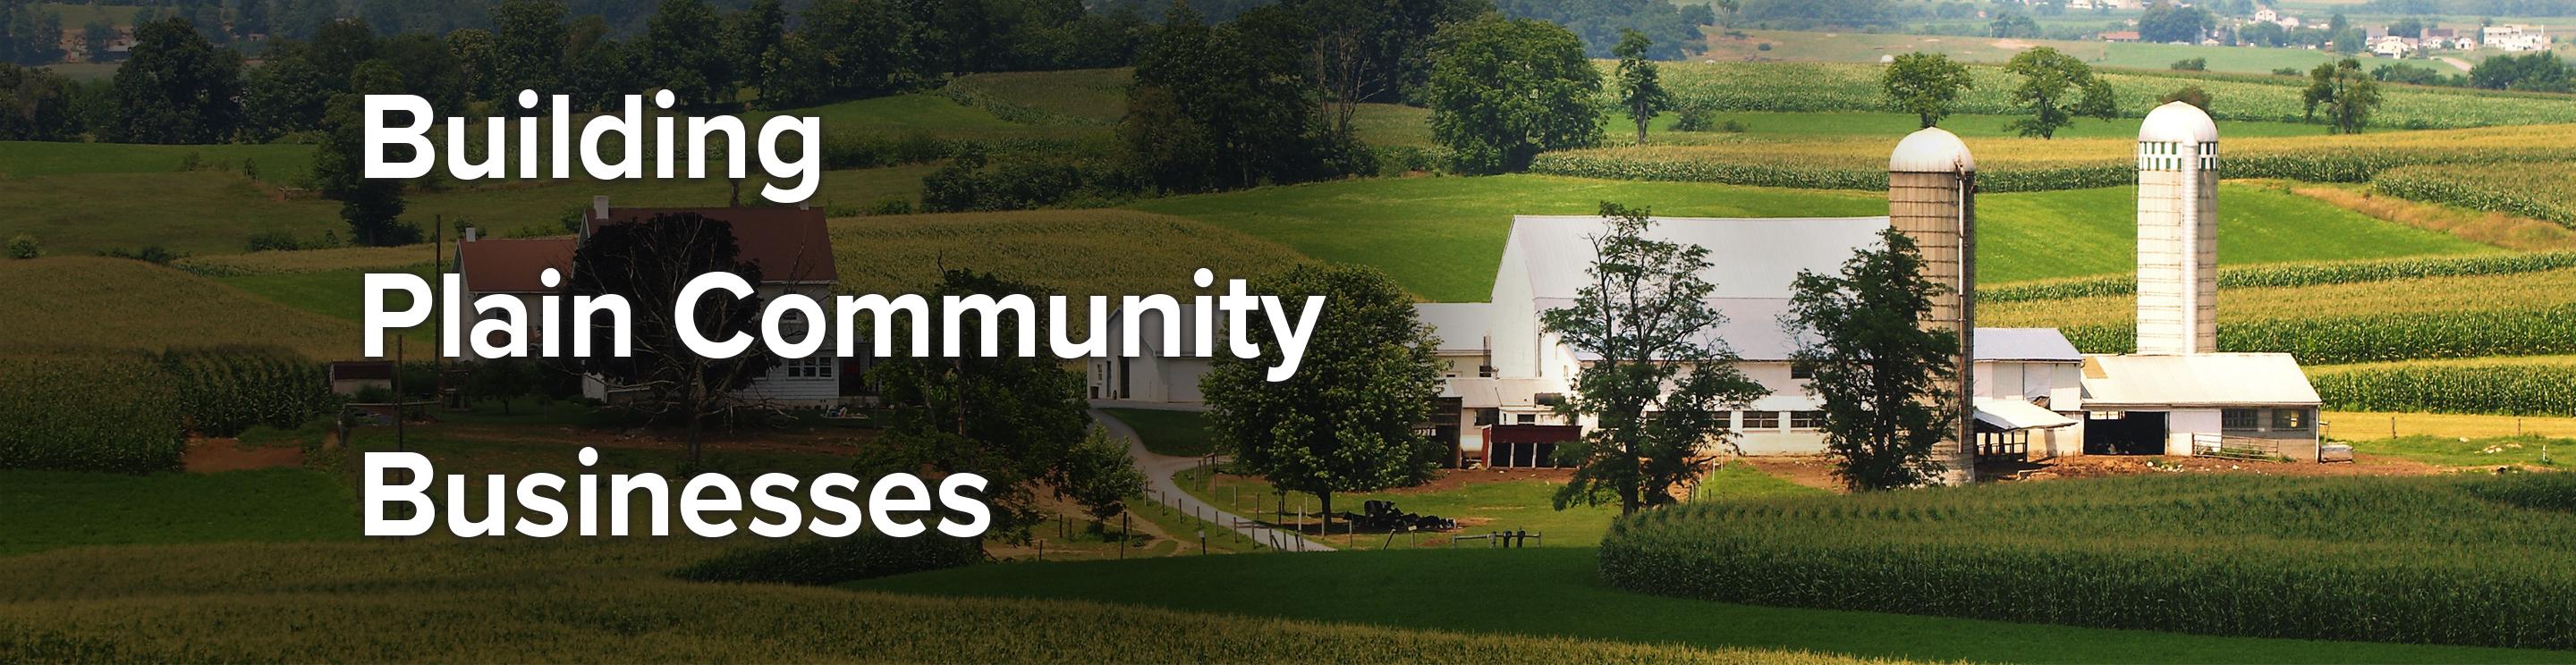 Building Plain Community Businesses - A picture of farmland